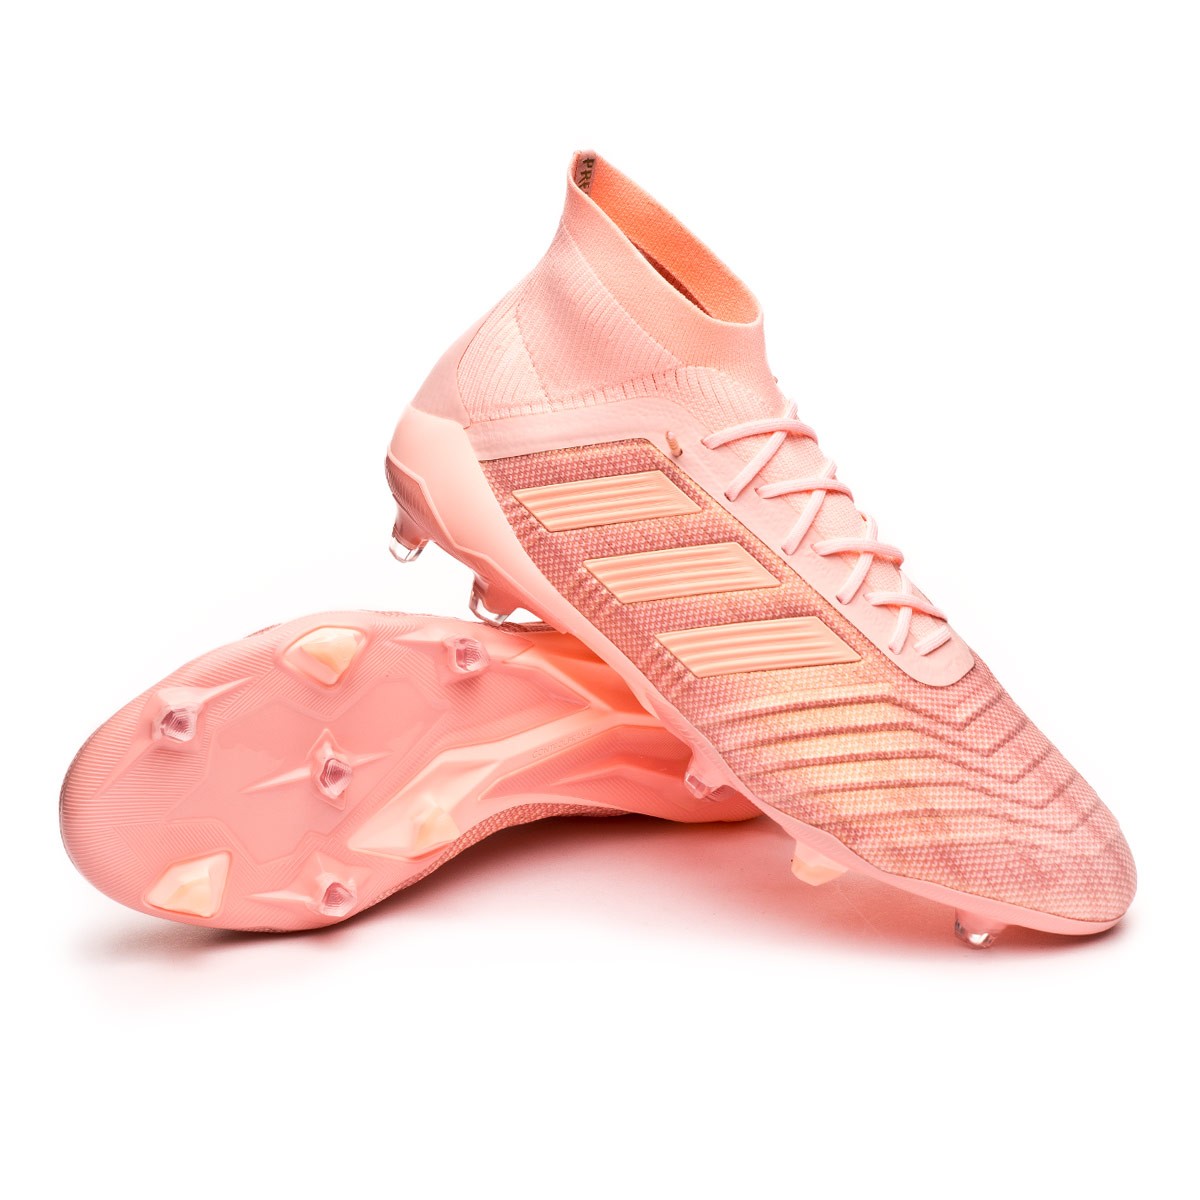 adidas predator pink 18.1